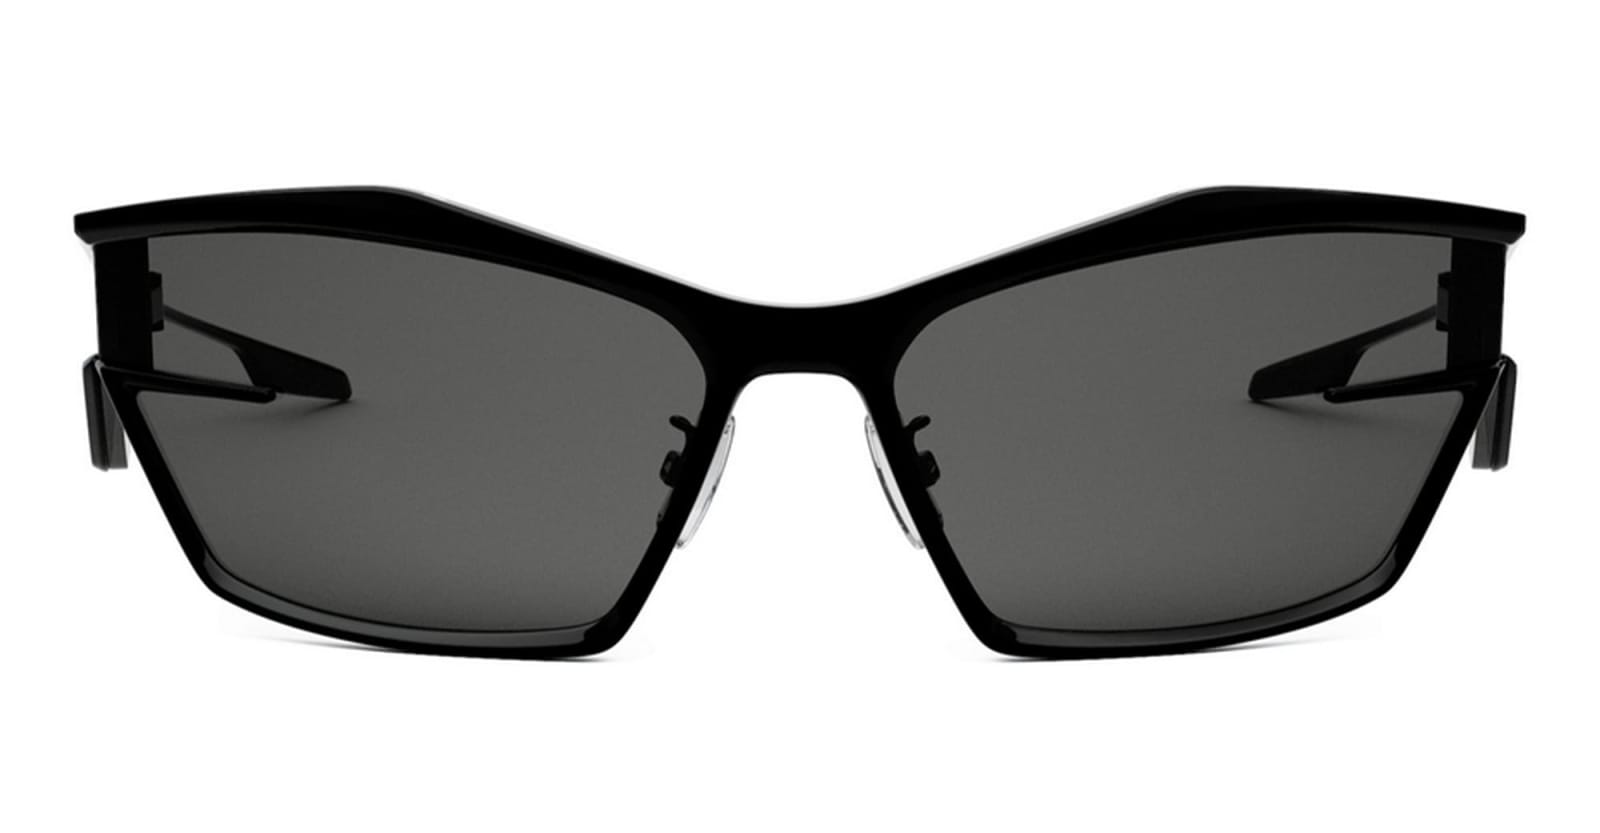 Gv40066u - Shiny Black Sunglasses